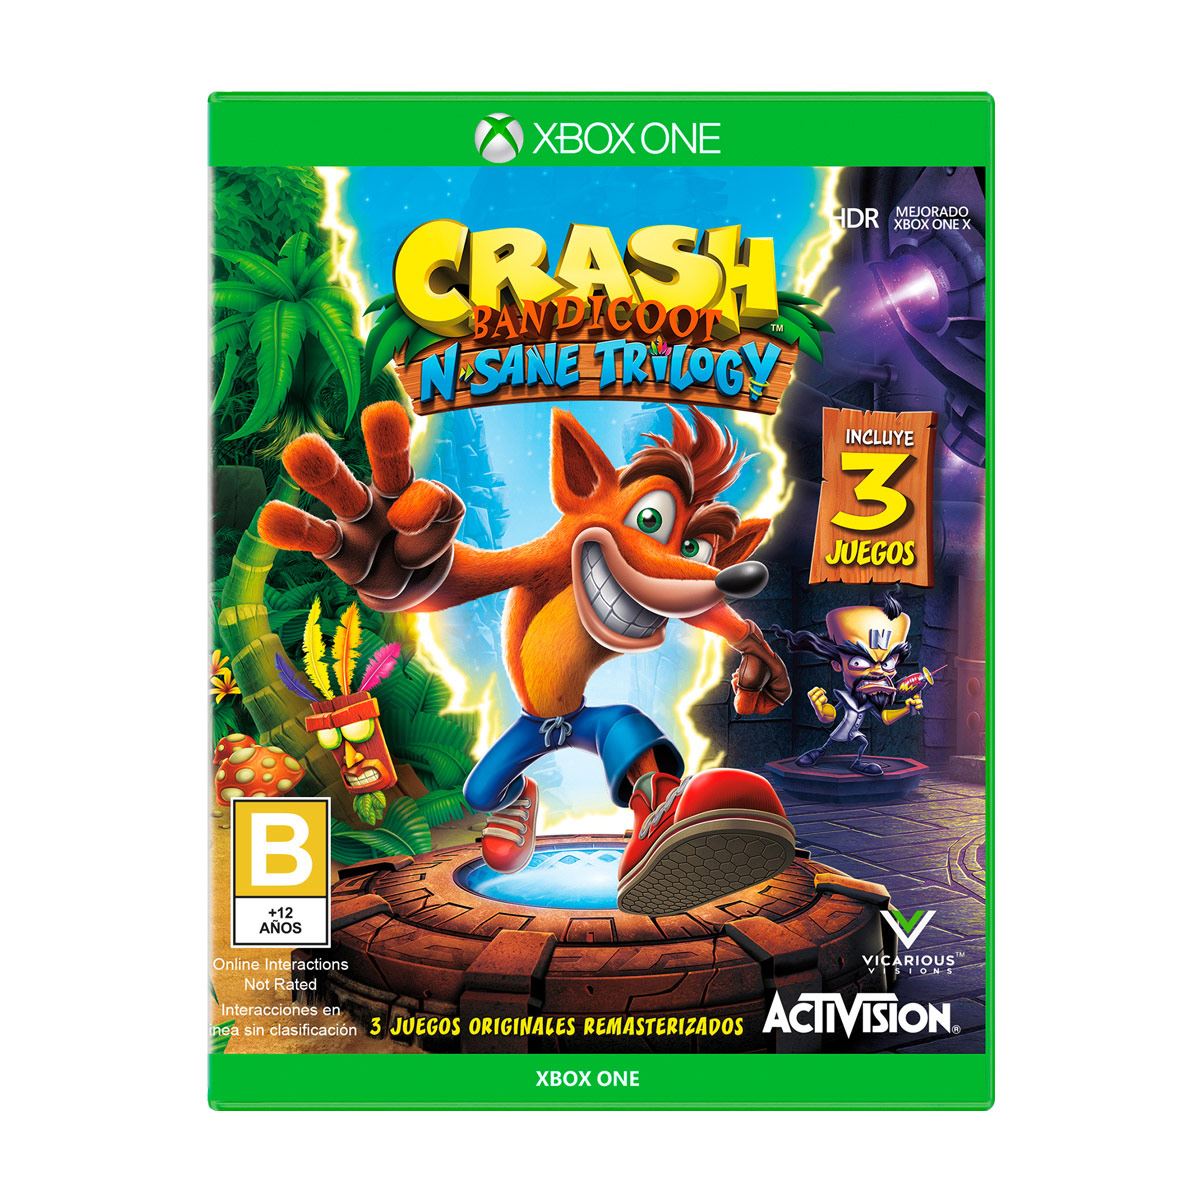 Xbox One Crash Bandicoot Trilogy